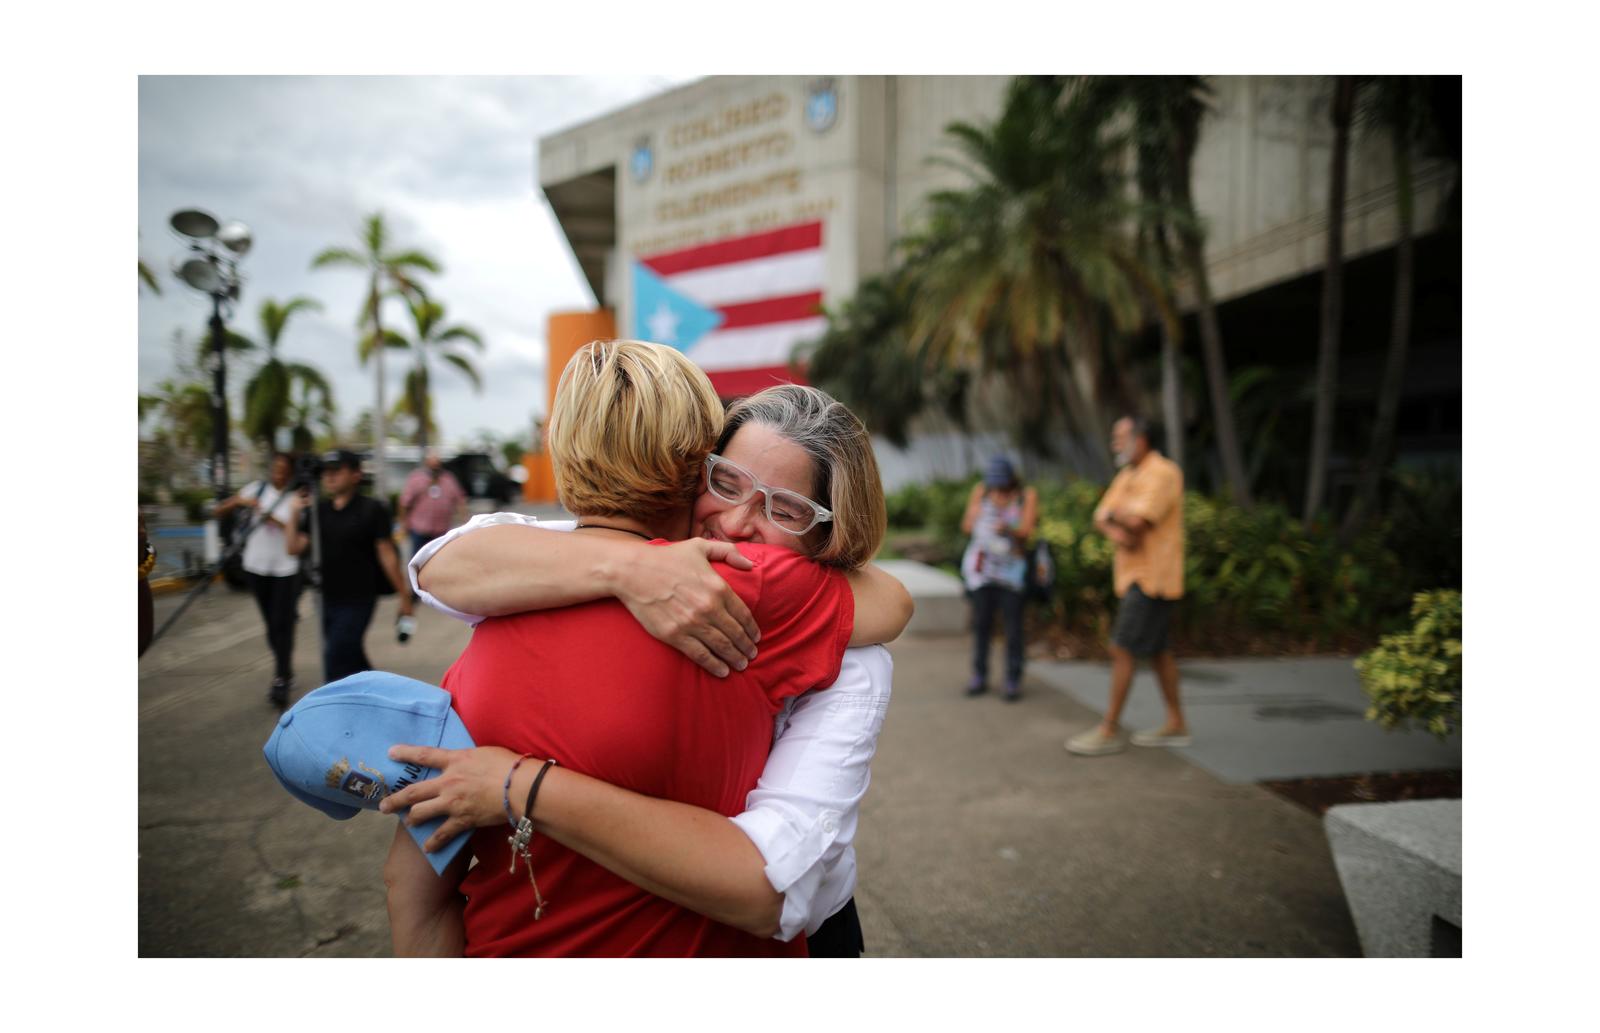 Mayor of San Juan Carmen Yulin Cruz embraces Esperanza Ruiz, a city administrator, outside the government center at the Roberto Clemente Coliseum after Hurricane Maria, in San Juan